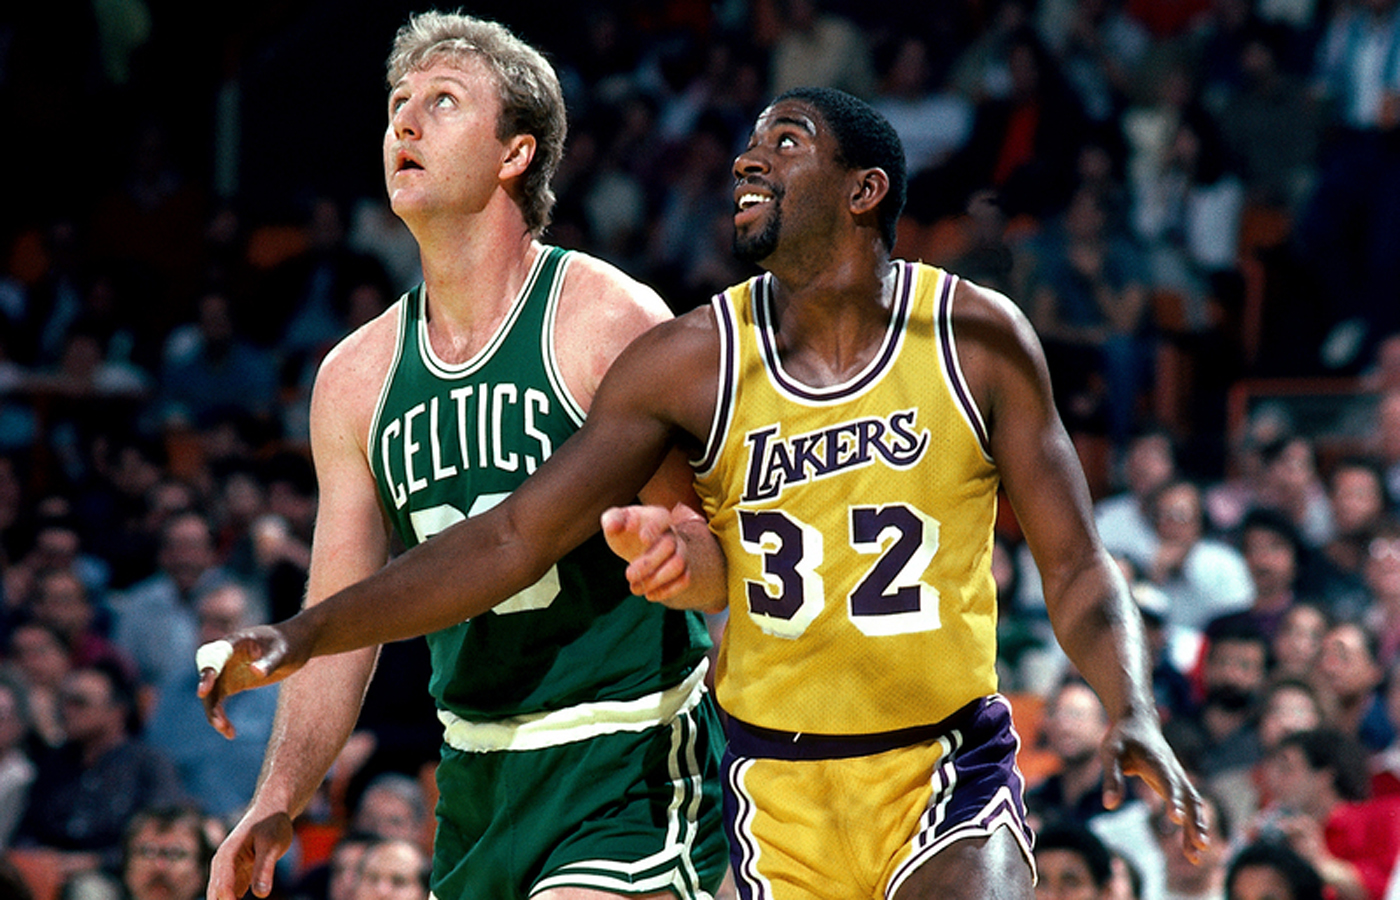 1986 Boston Celtics best ever? Tommy Heinsohn: 'Give me a break